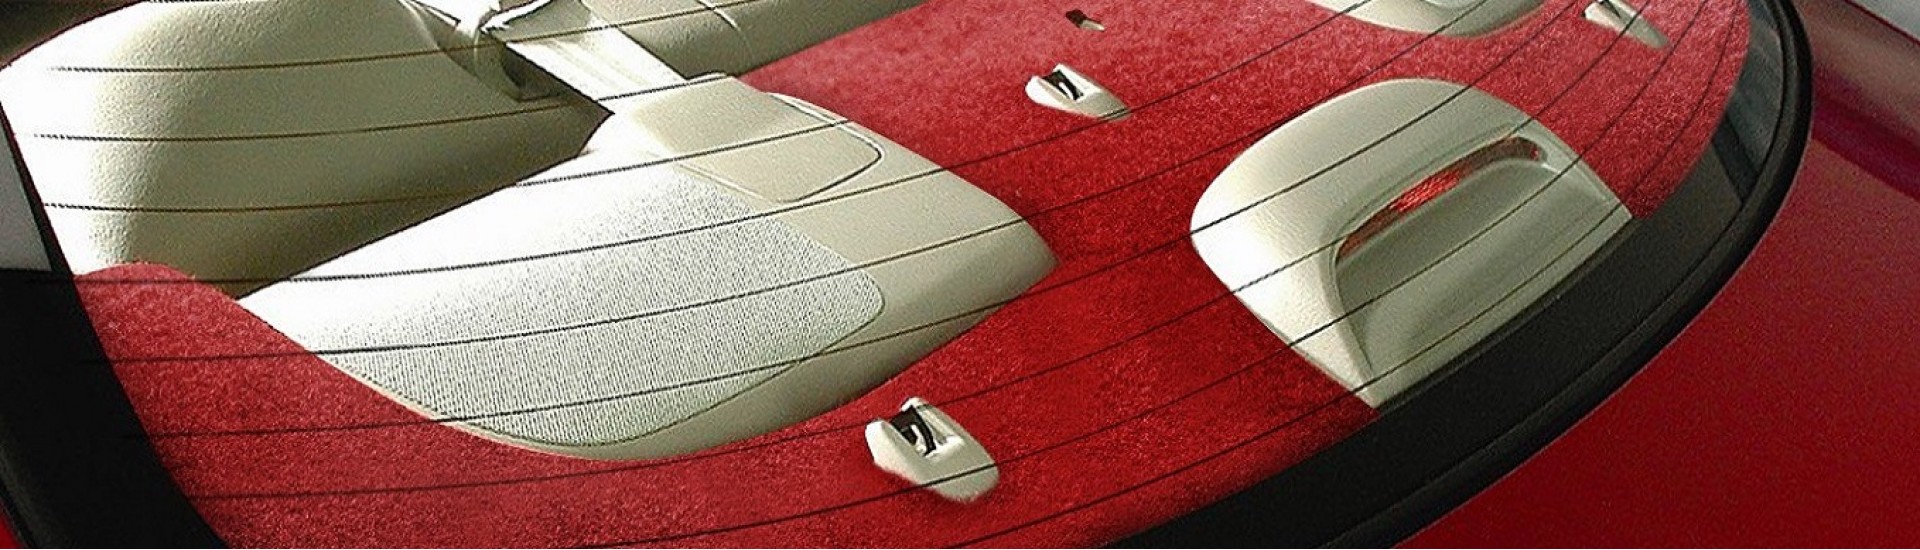 روکش طاقچه عقب پورشه 911 GT2 2012 